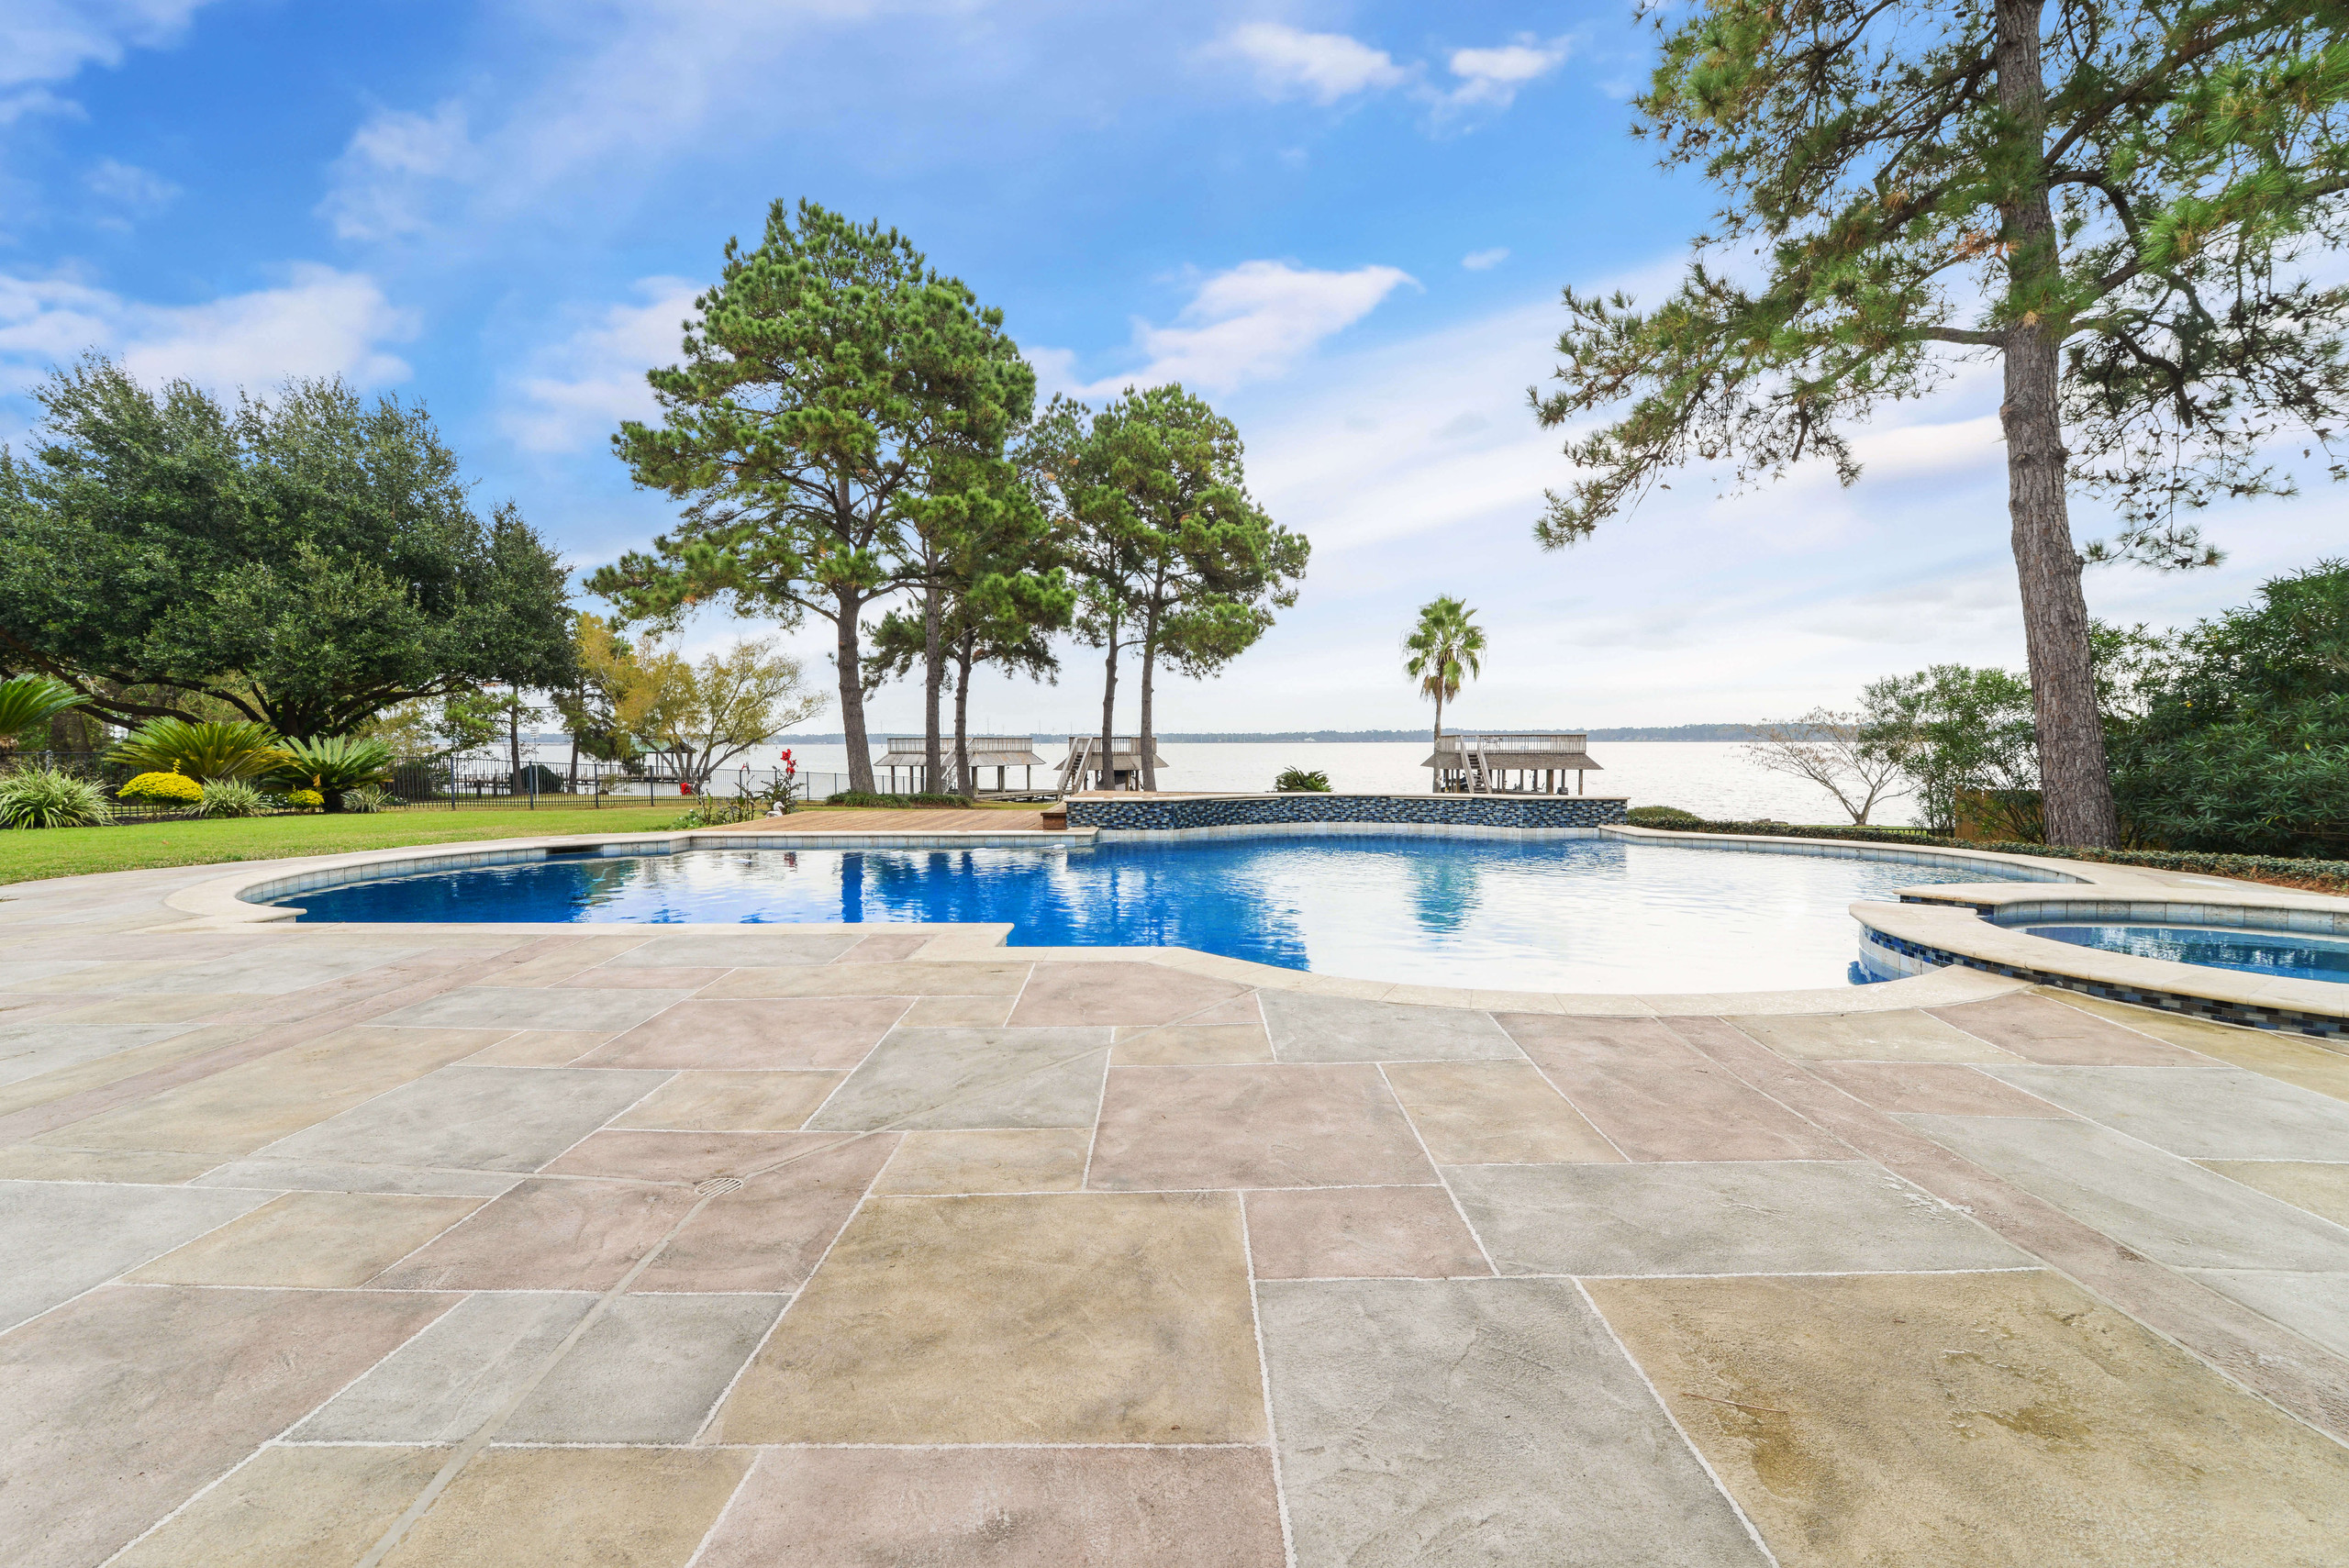 Tan carvestone concrete pool decking design patio idea backyard views Texas